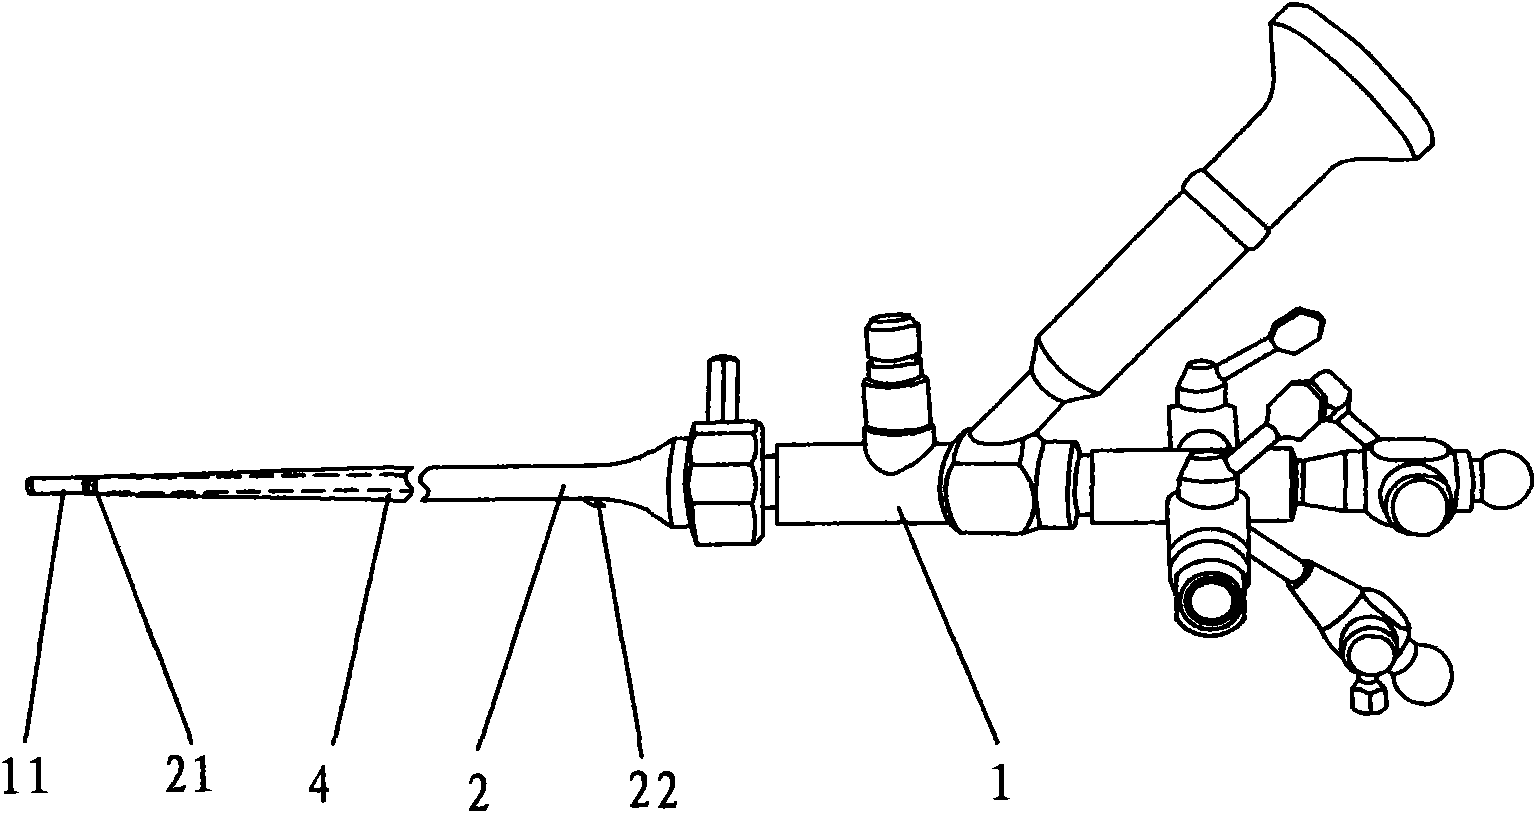 Combined rigid ureteroscope